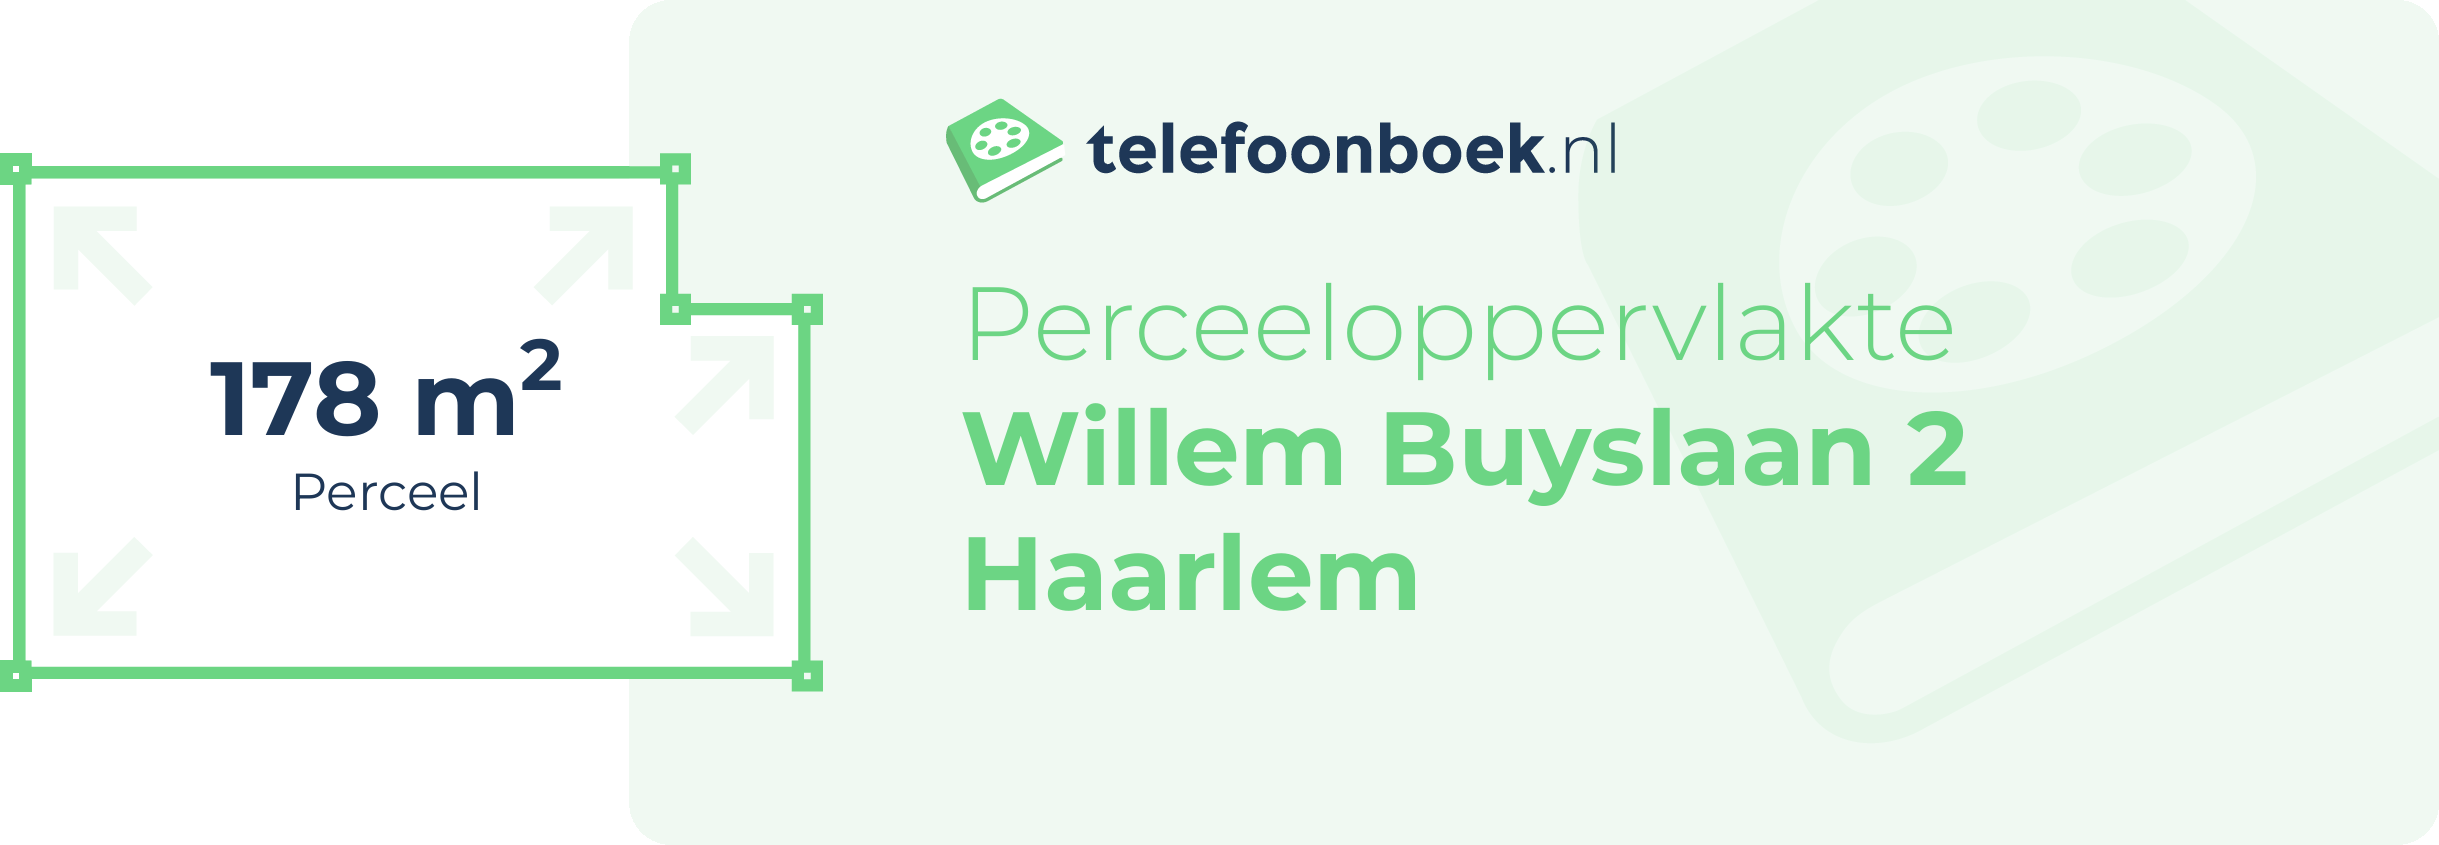 Perceeloppervlakte Willem Buyslaan 2 Haarlem